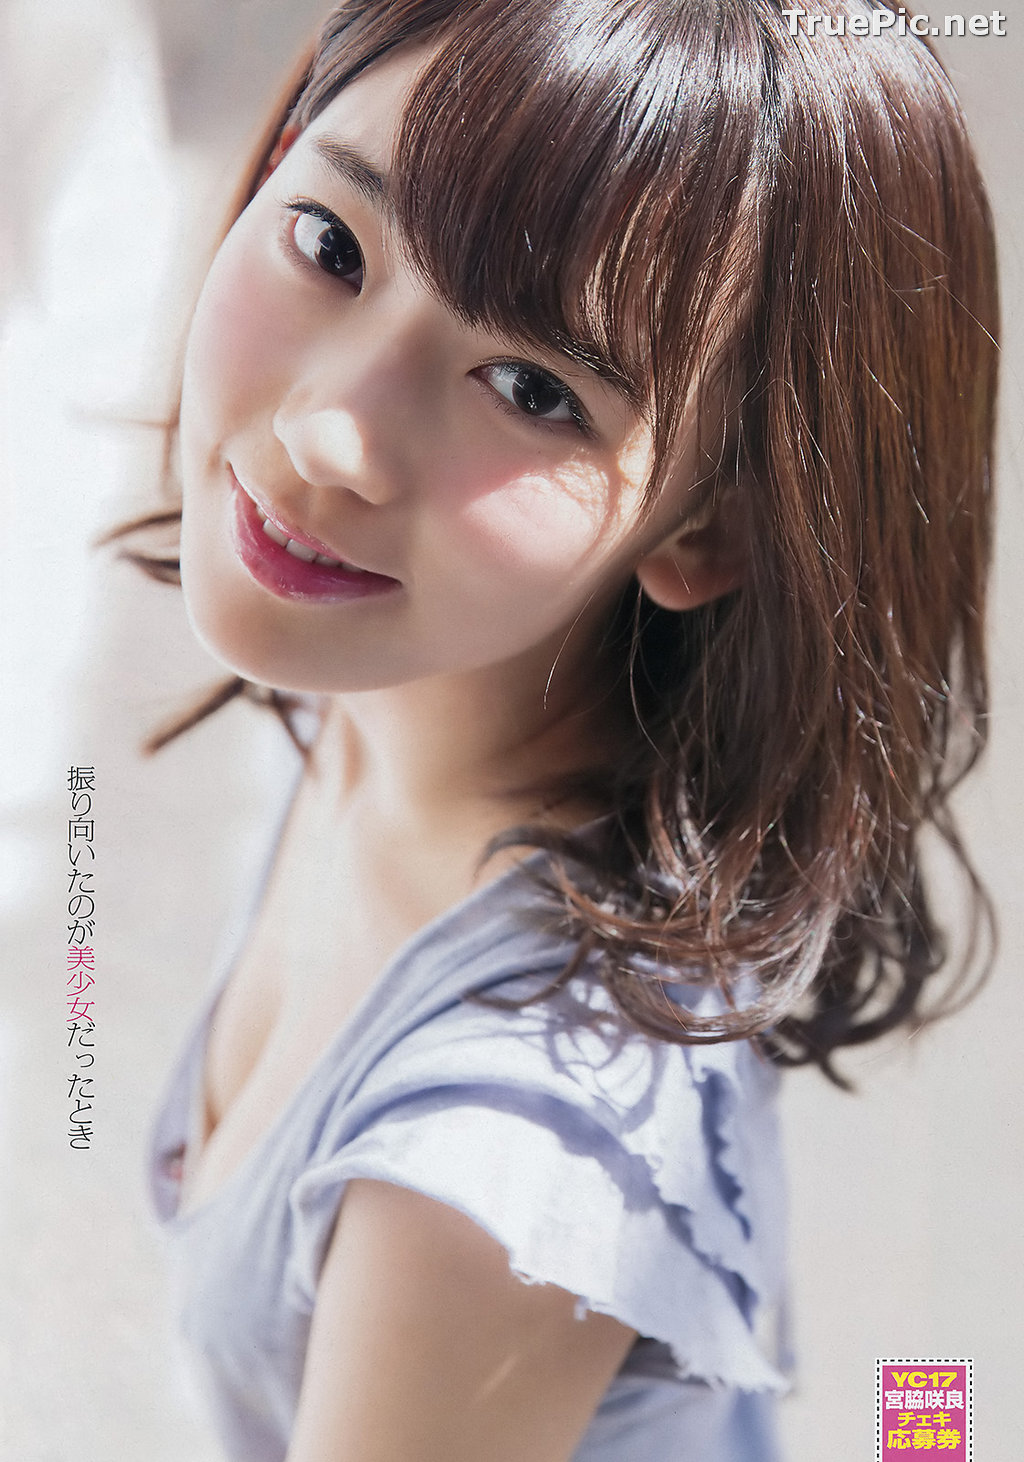 Image Japanese Singer and Actress - Sakura Miyawaki (宮脇咲良) - Sexy Picture Collection 2021 - TruePic.net - Picture-211